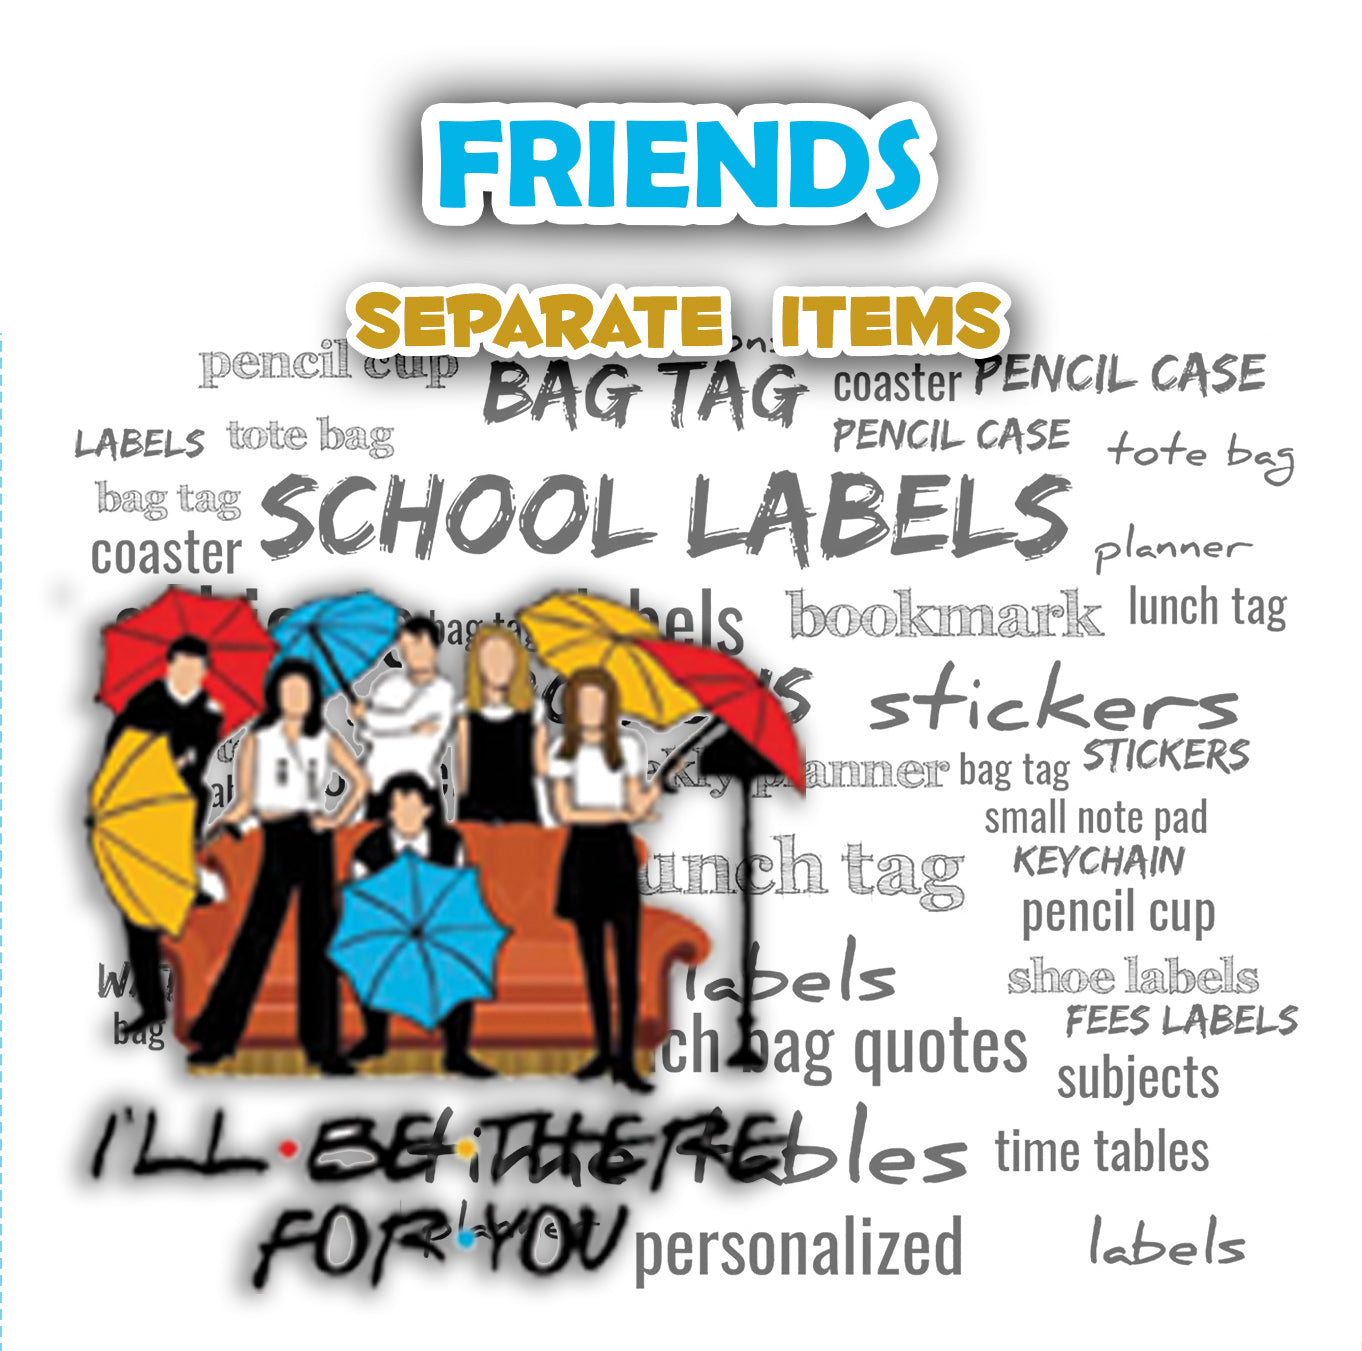 ""Friends" Separate items